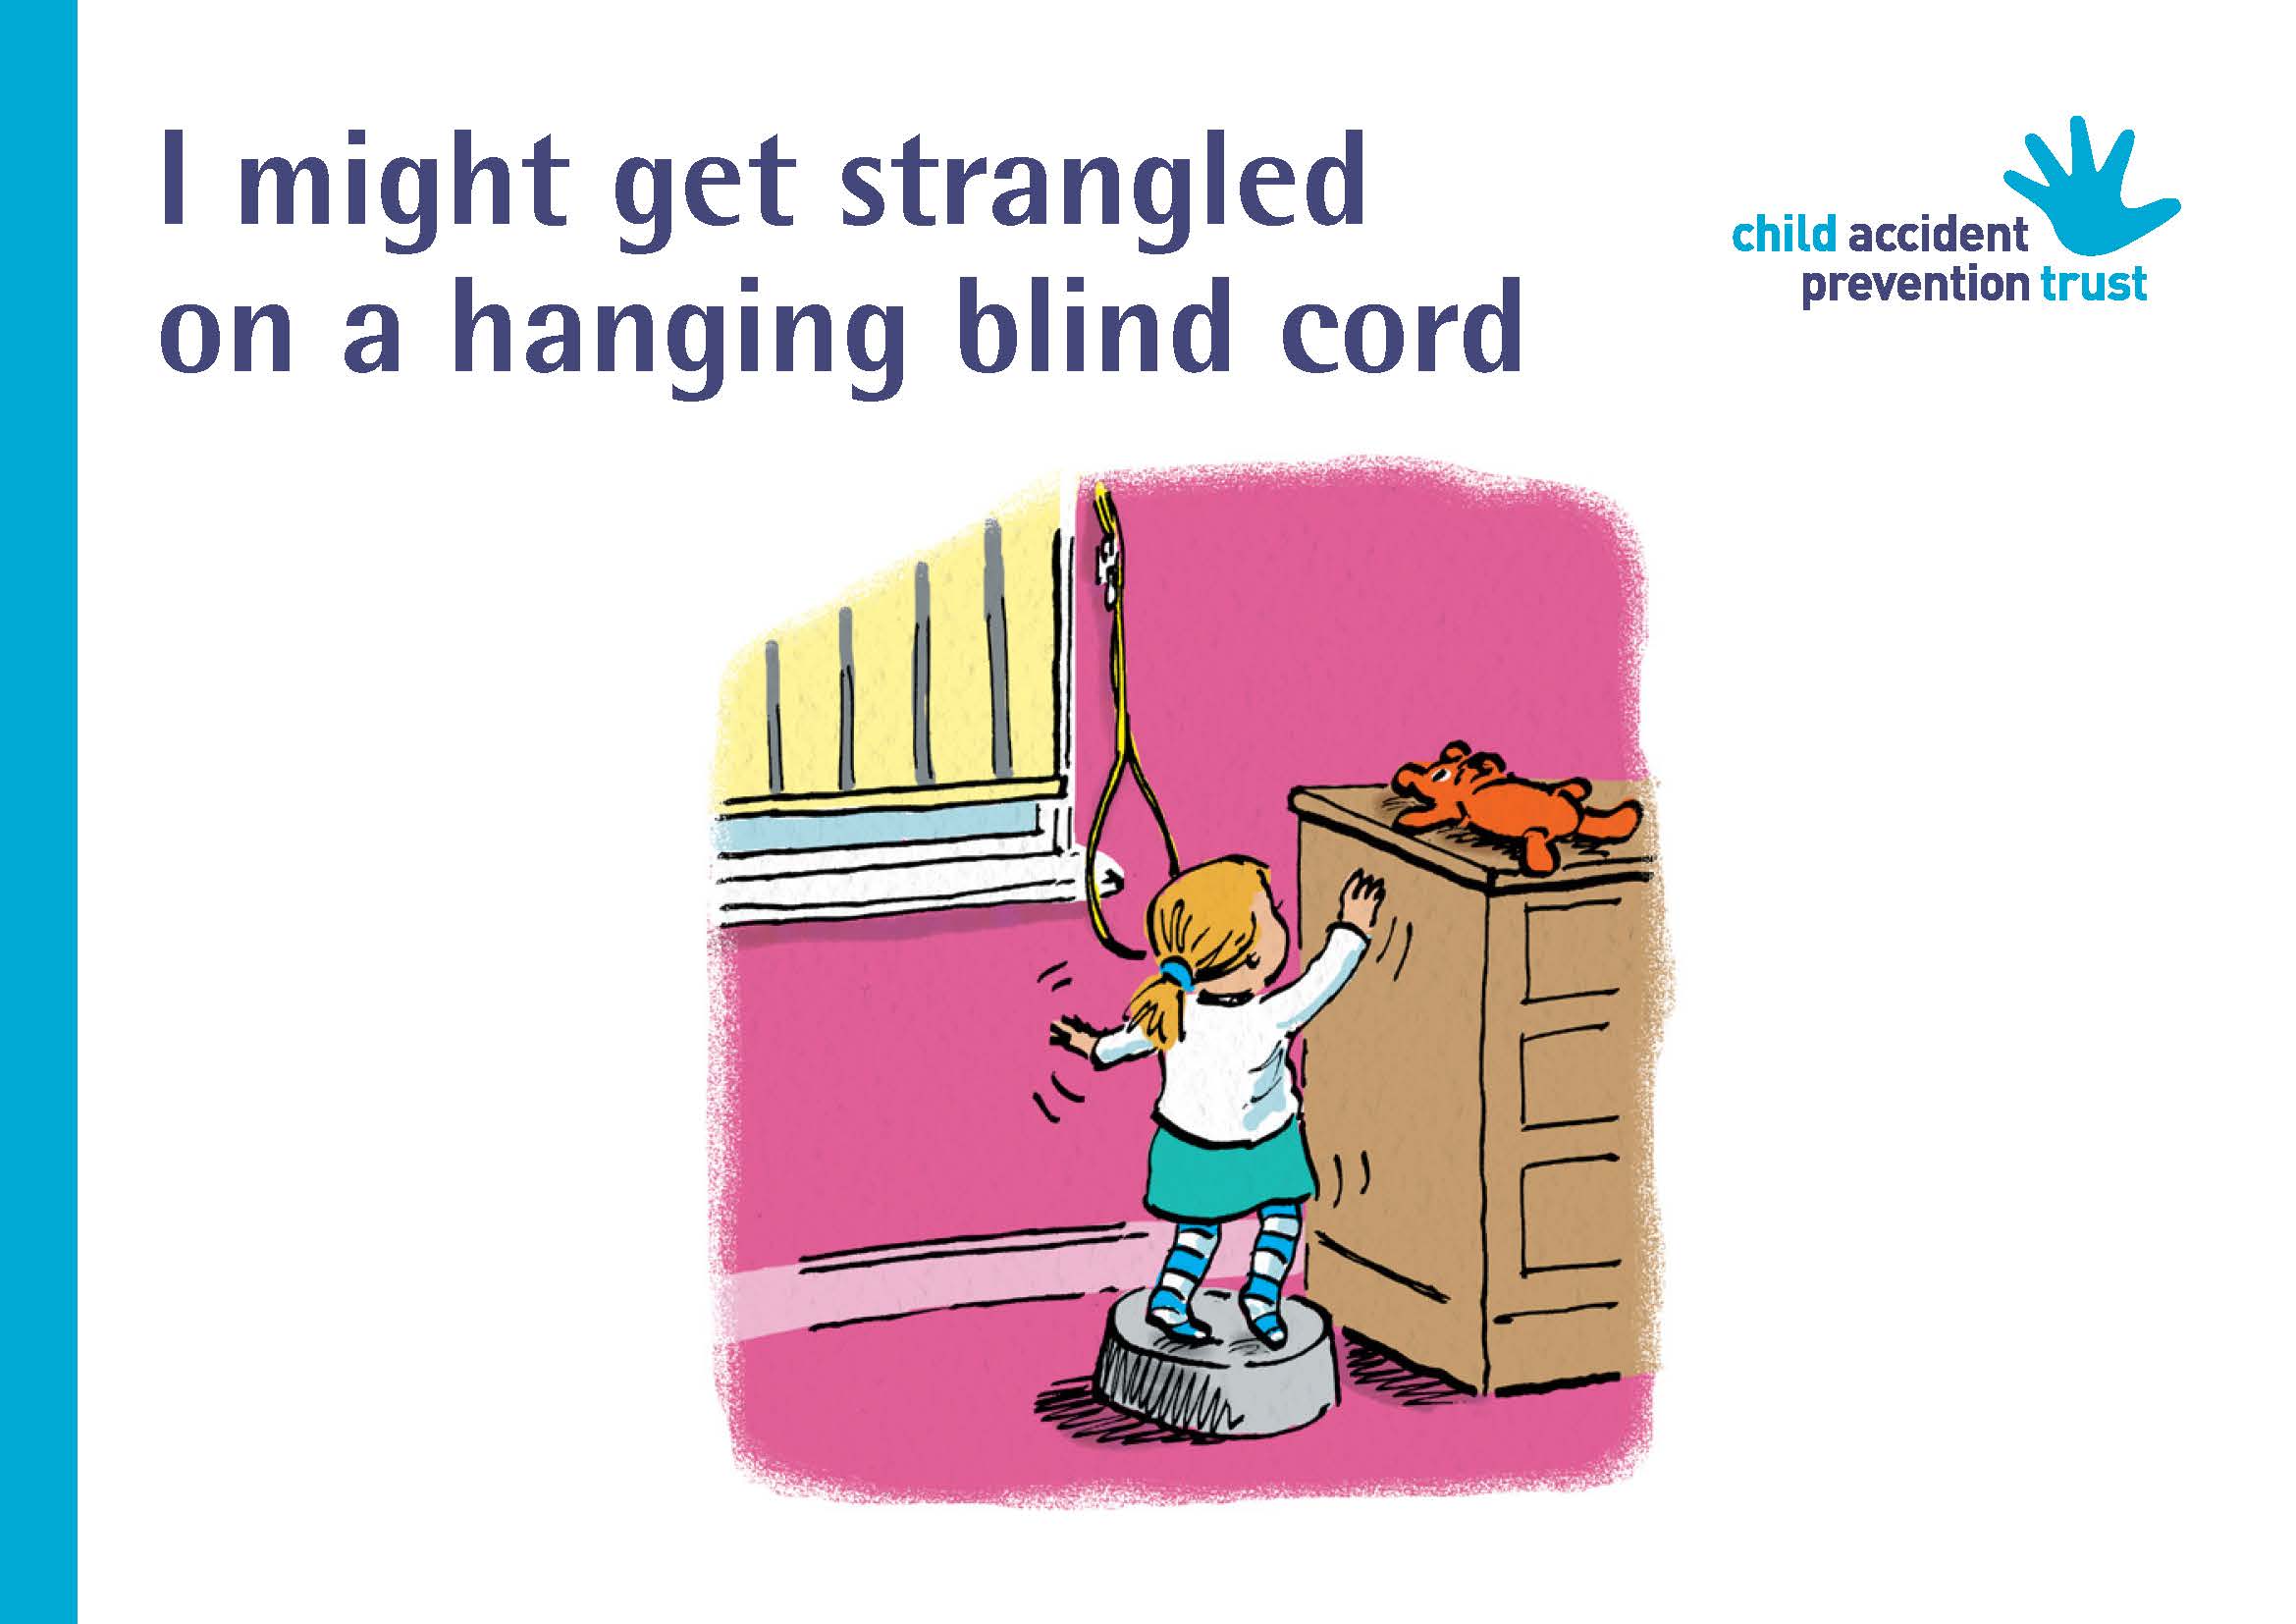 prevent strangle accidents for children